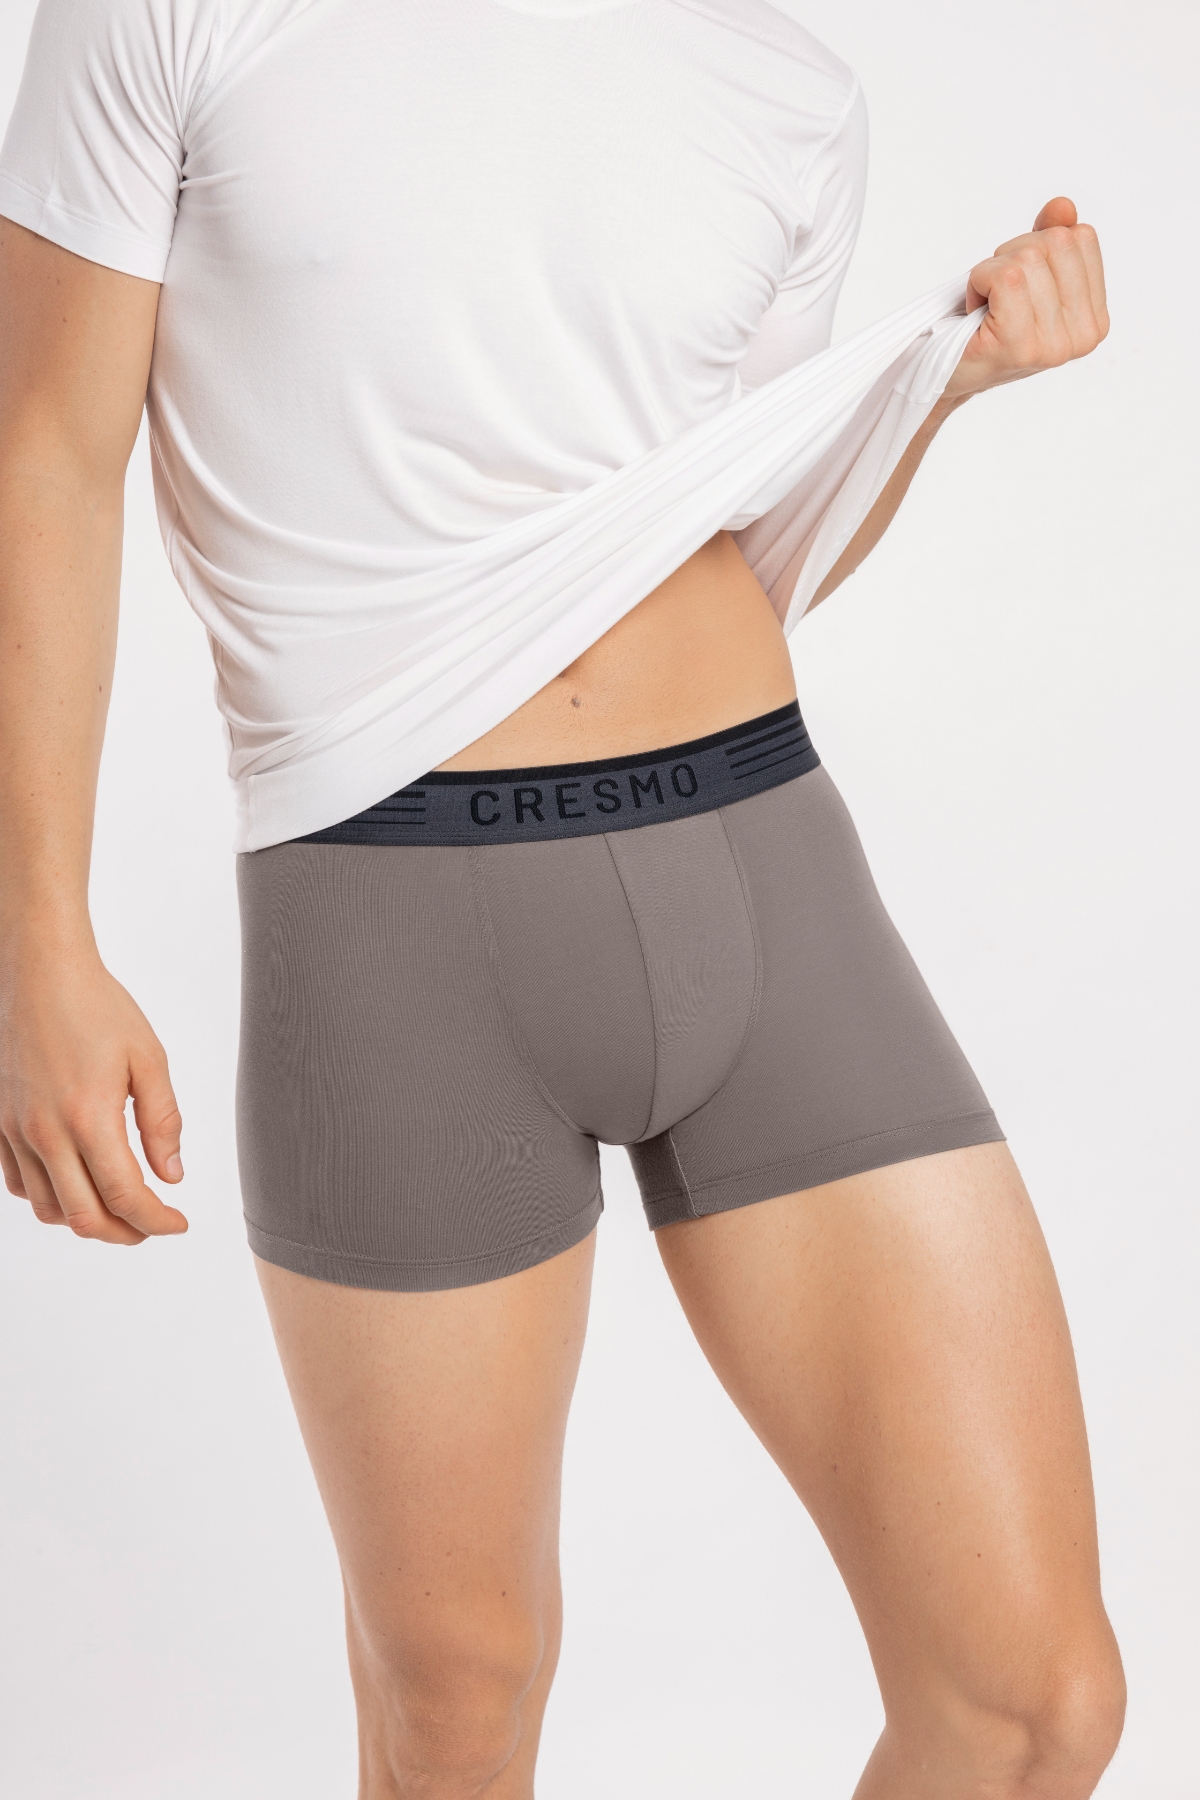 CRESMO | CRESMO Men's Anti-Microbial Micro Modal Underwear Breathable Ultra Soft Trunk 3